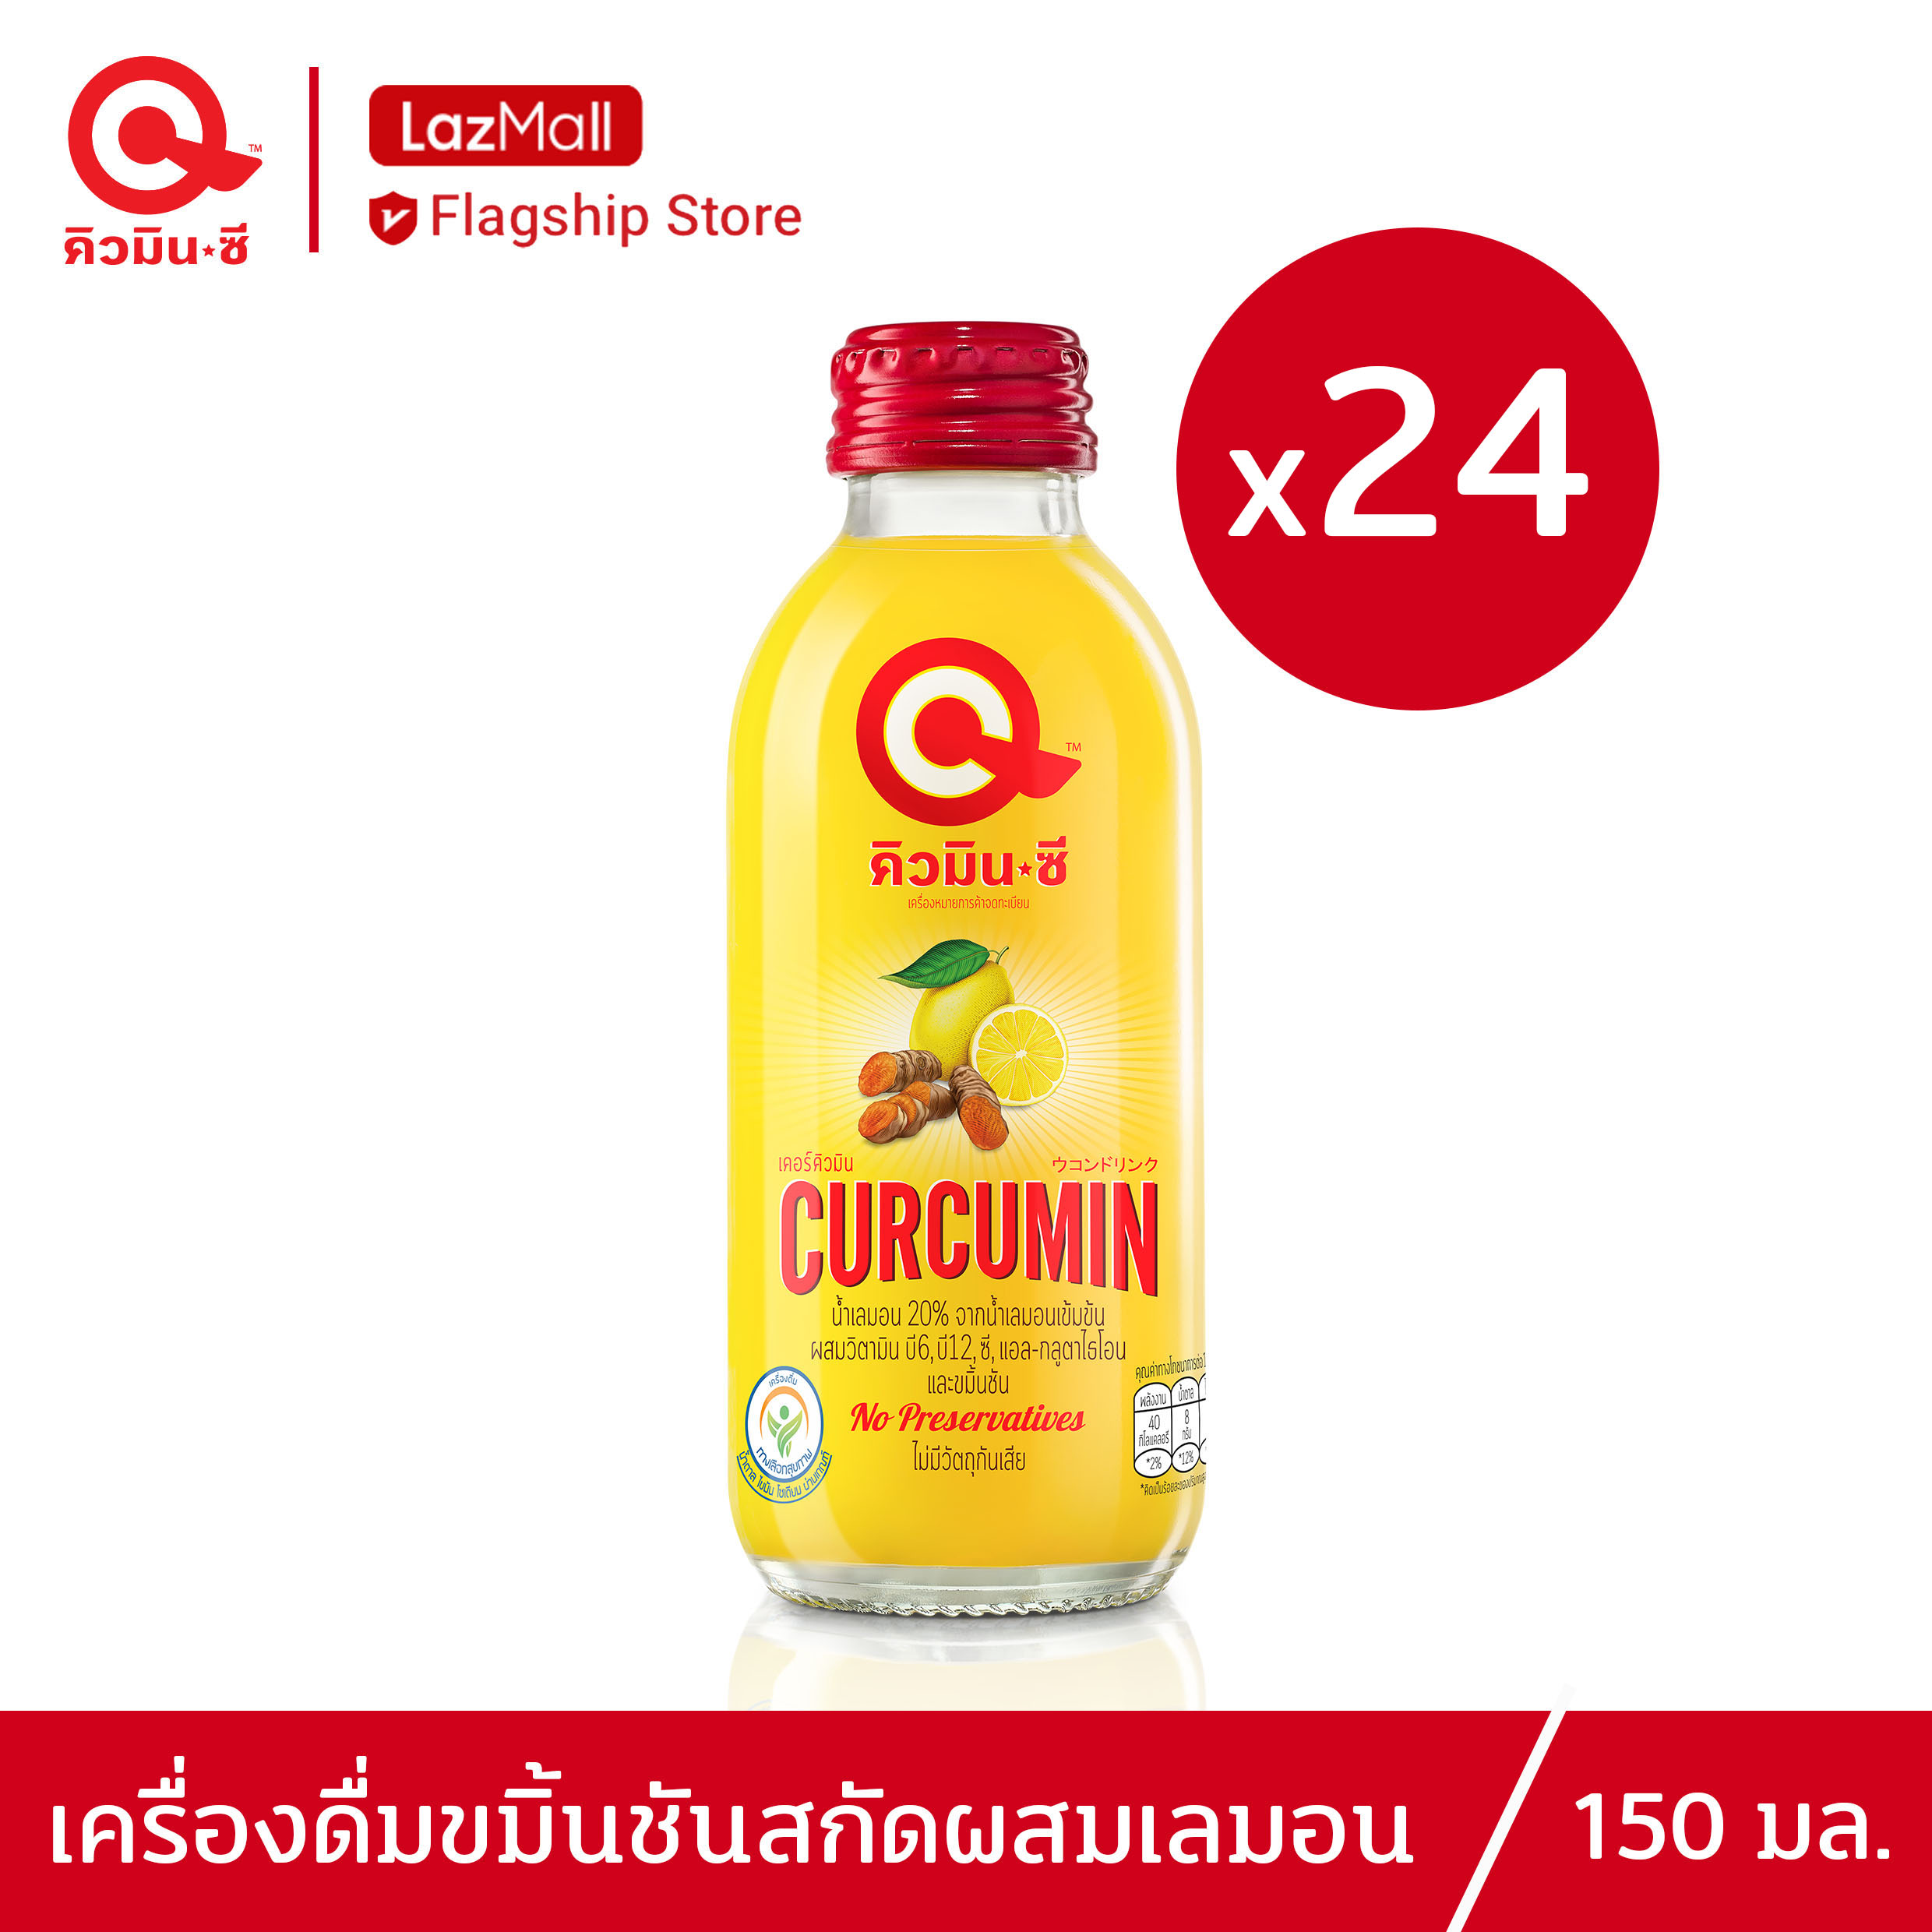 QminC คิวมินซี เครื่องดื่มขมิ้นชันสกัดผสมเลมอน 1 ลัง (24 ขวด) QminC Health drink with curcumin extracted with lemon juice 1 Carton (24 Bottles)